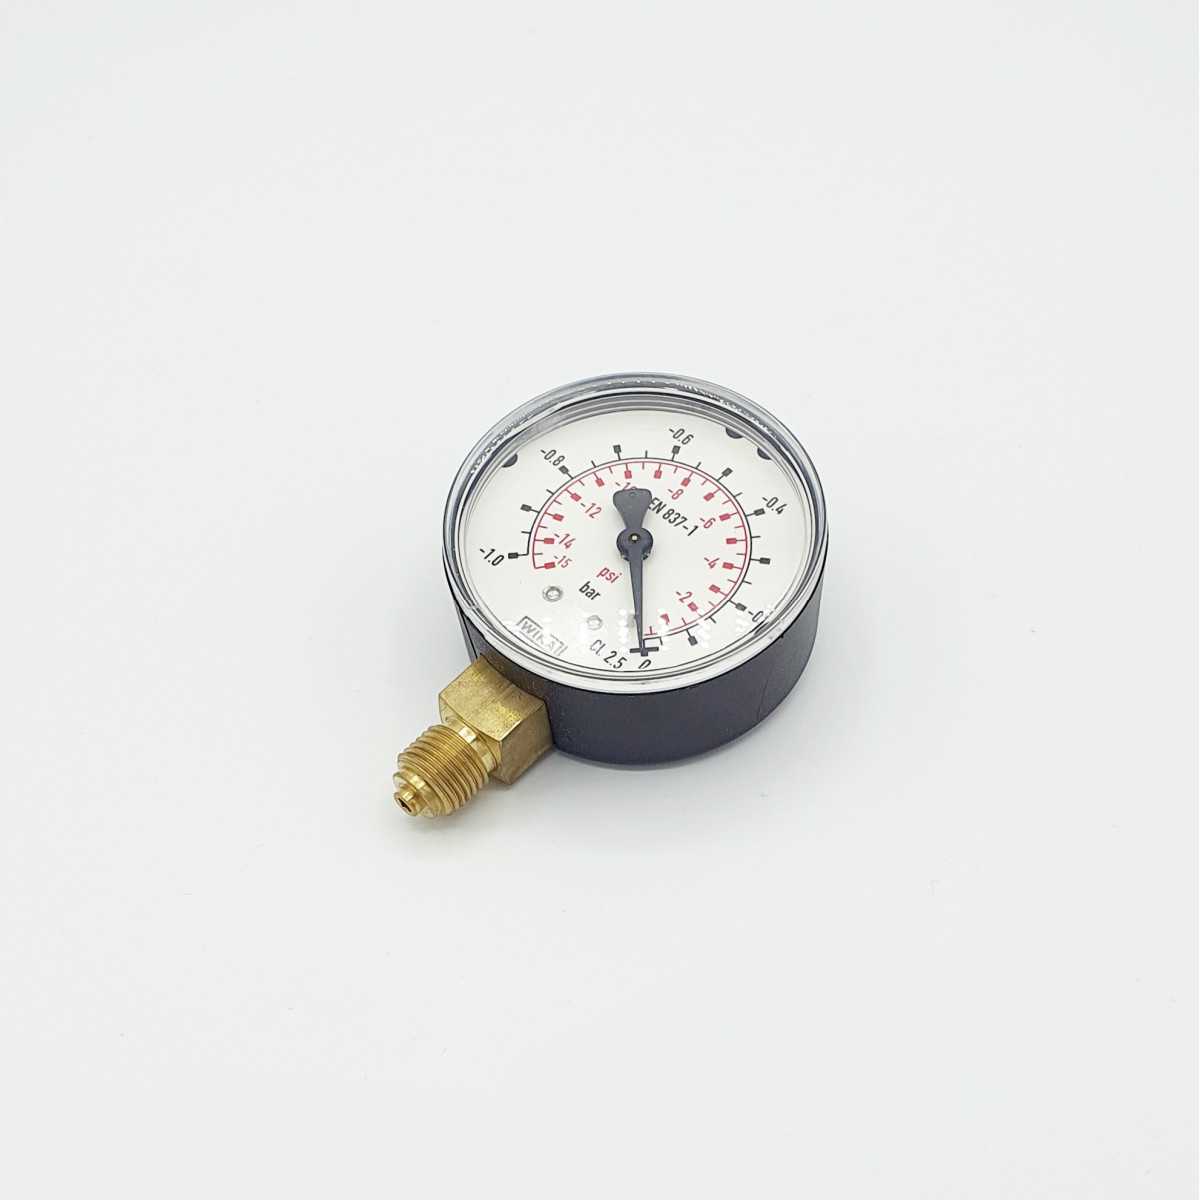 Vacuum gauge DM100 G 1/2" U | Beta Online Shop